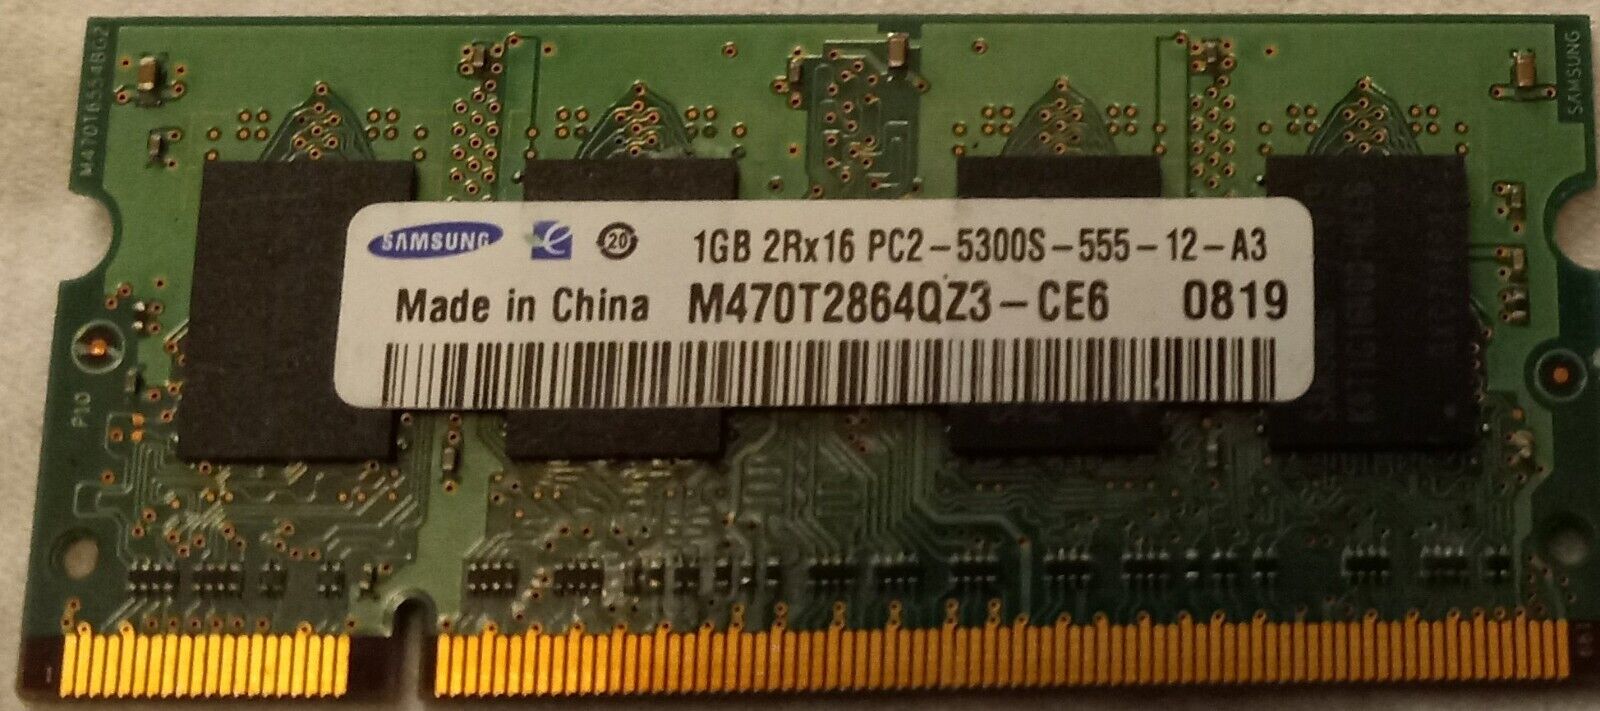 1GB 2Rx16 PC2-5300S-555-12-A3 SODIMM-Samsung